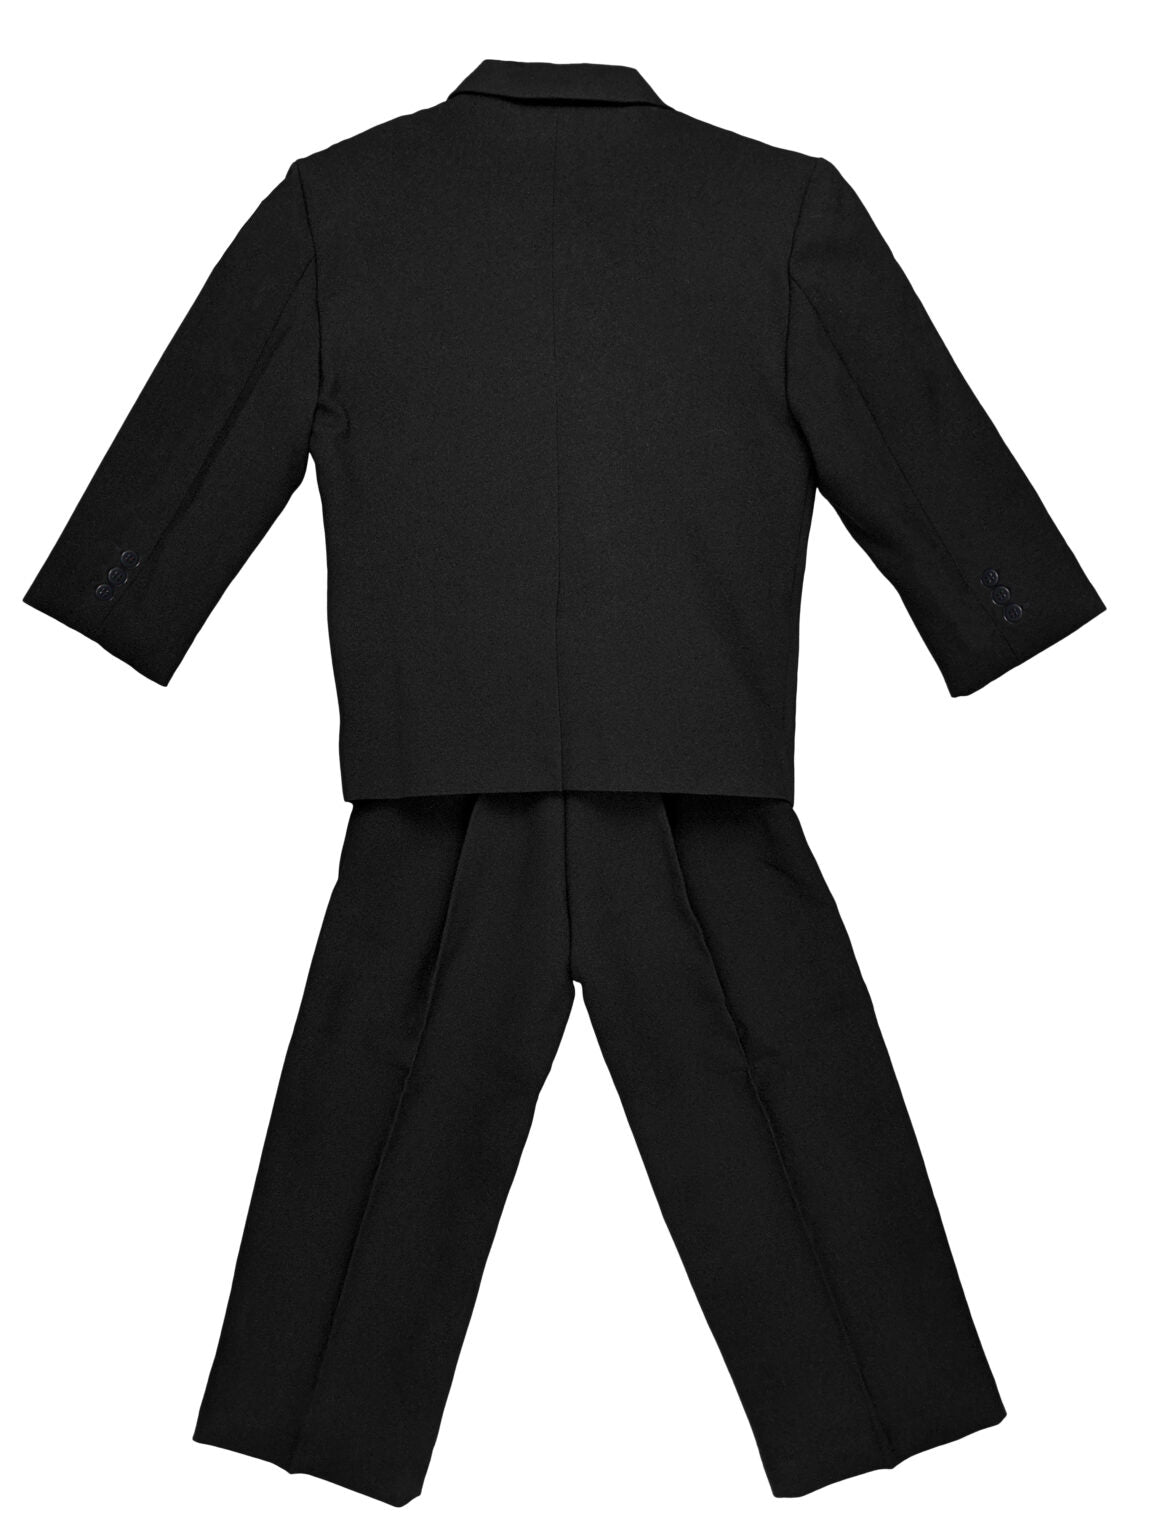 Boys Formal 5 Piece Suit with Shirt, Vest, Tie and Garment Bag – Black - LTMAL-AH-BY029-BLACK